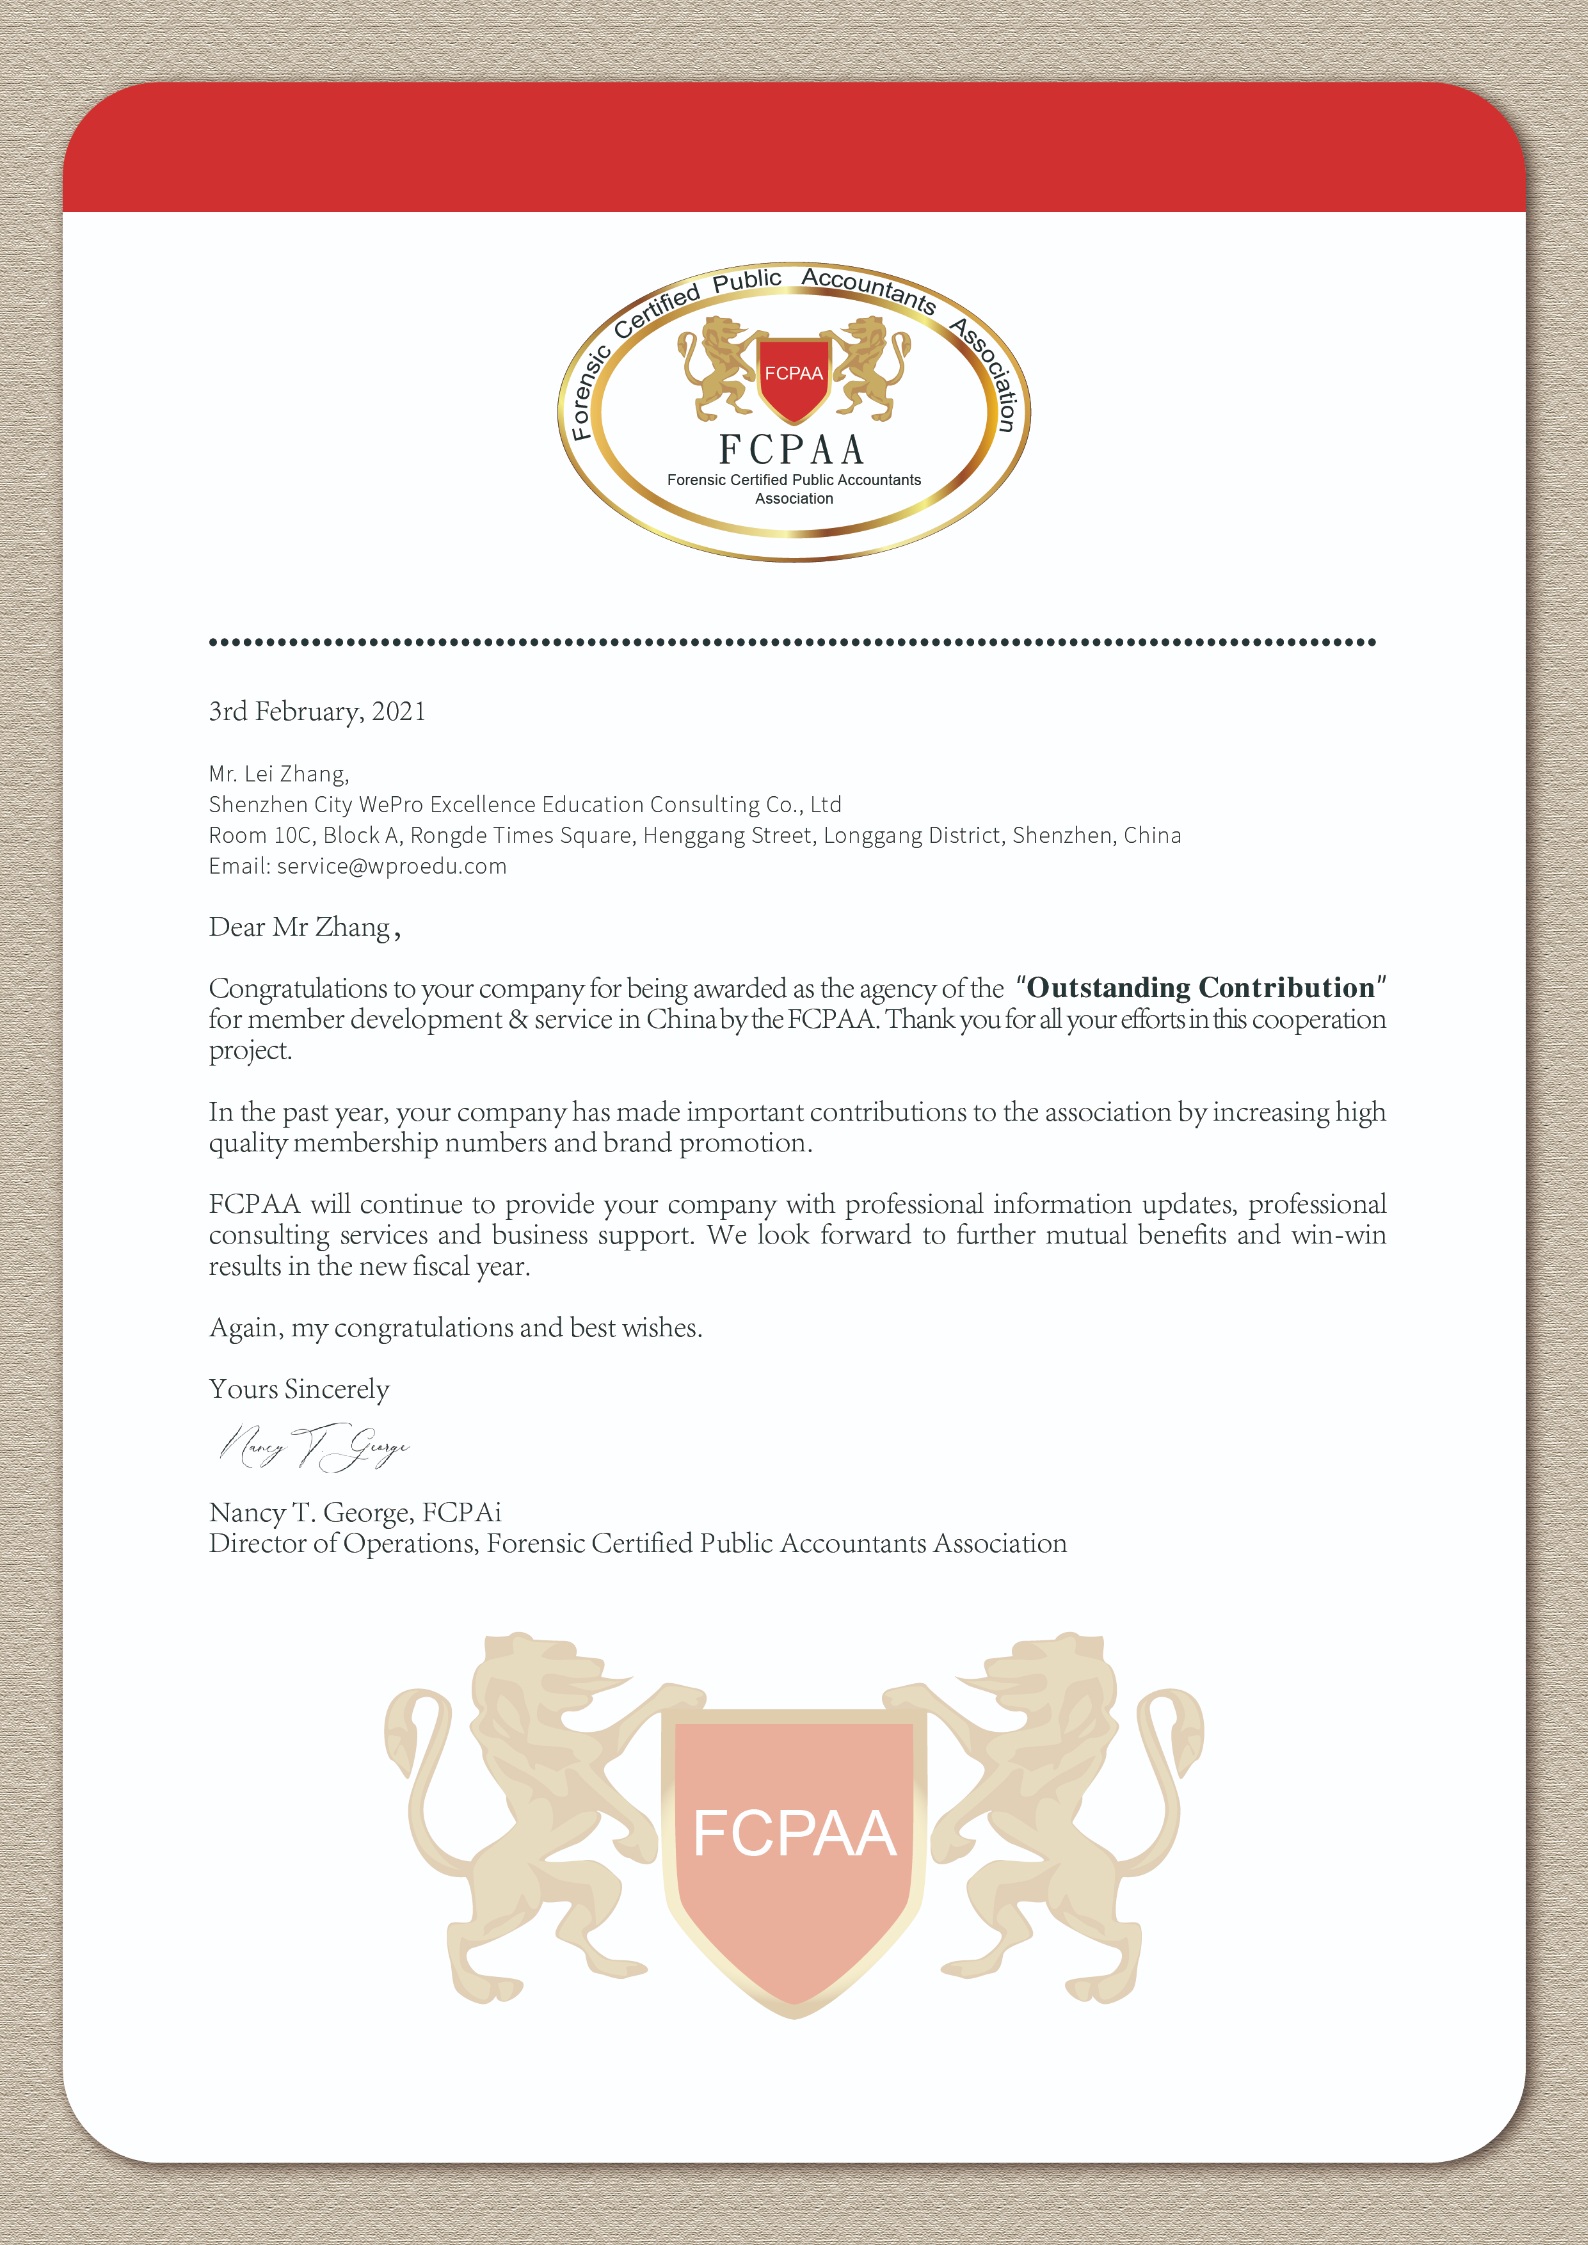 FCPAA 2020年度“突出贡献”合作伙伴